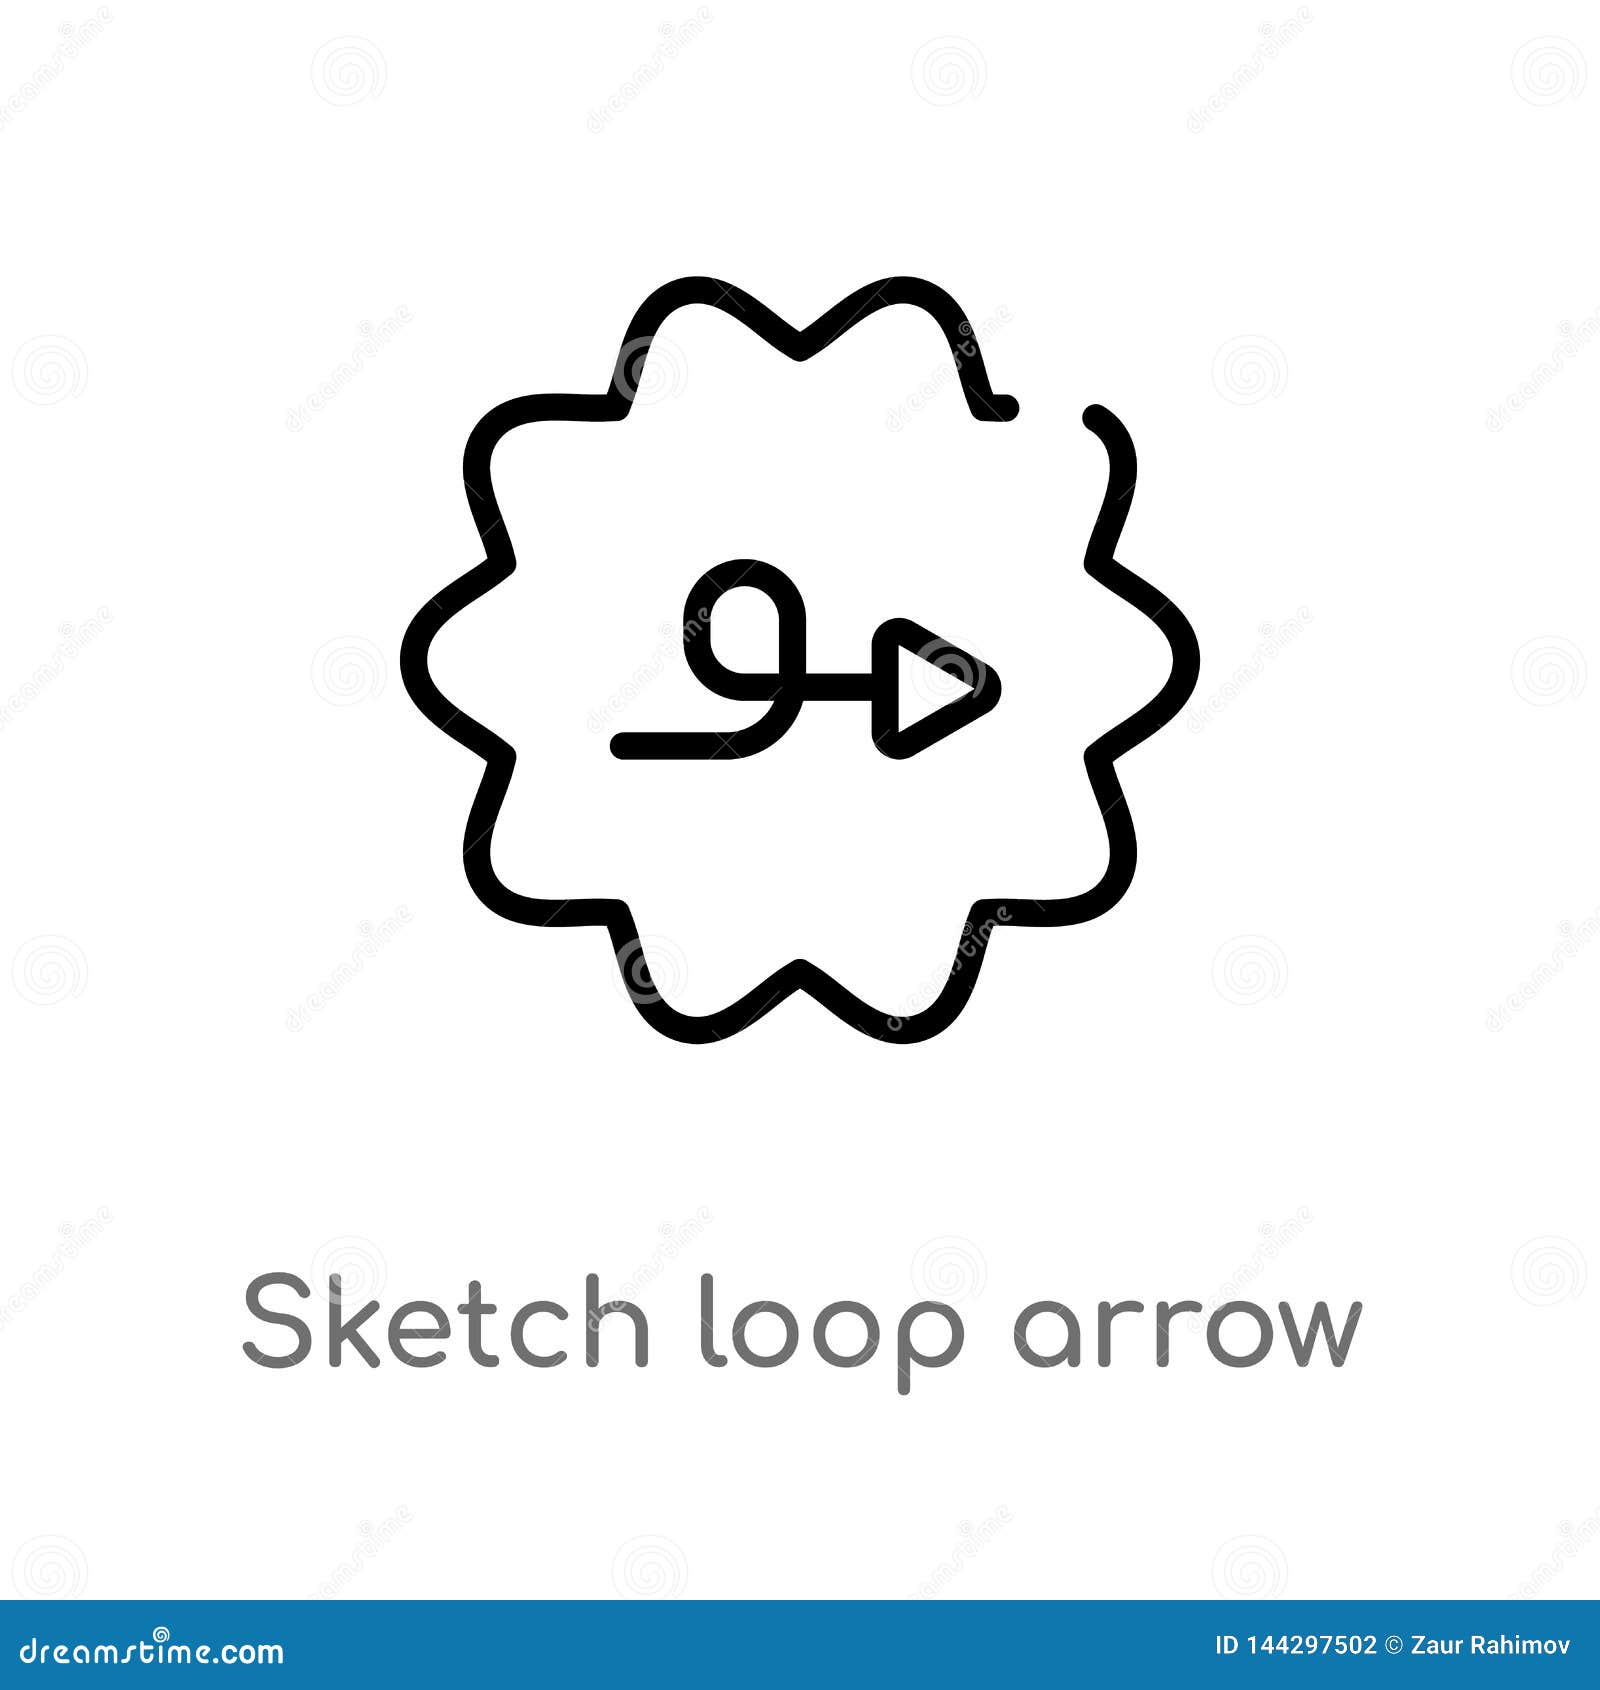 Outline Sketch Loop Arrow Vector Icon. Isolated Black Simple Line